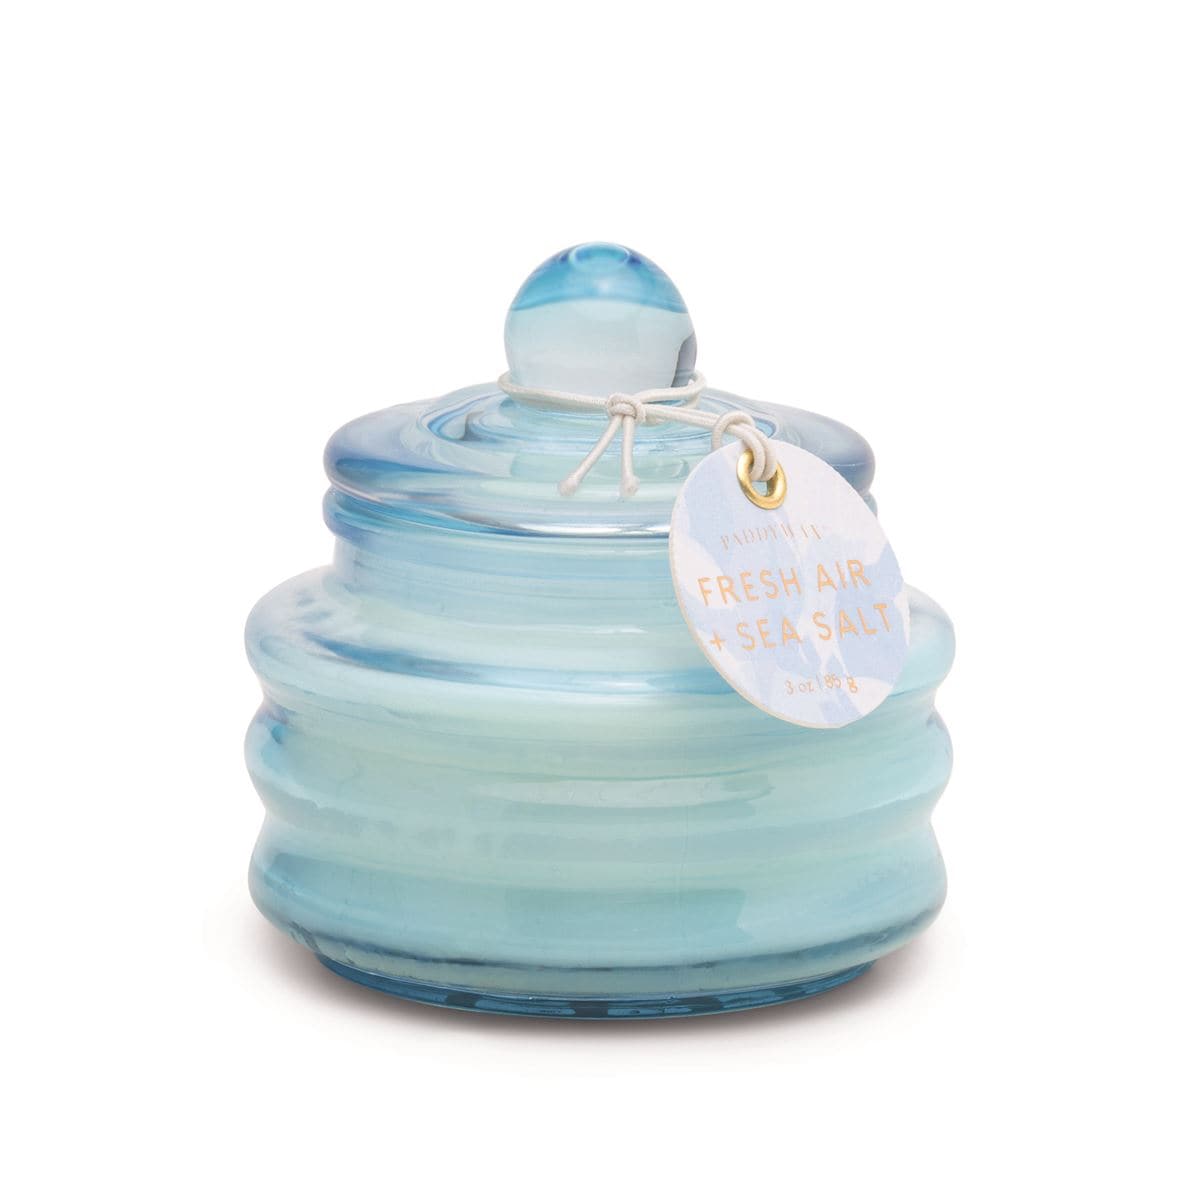 Fresh Air + Sea Salt 3 oz Small Glass Candle - The Preppy Bunny